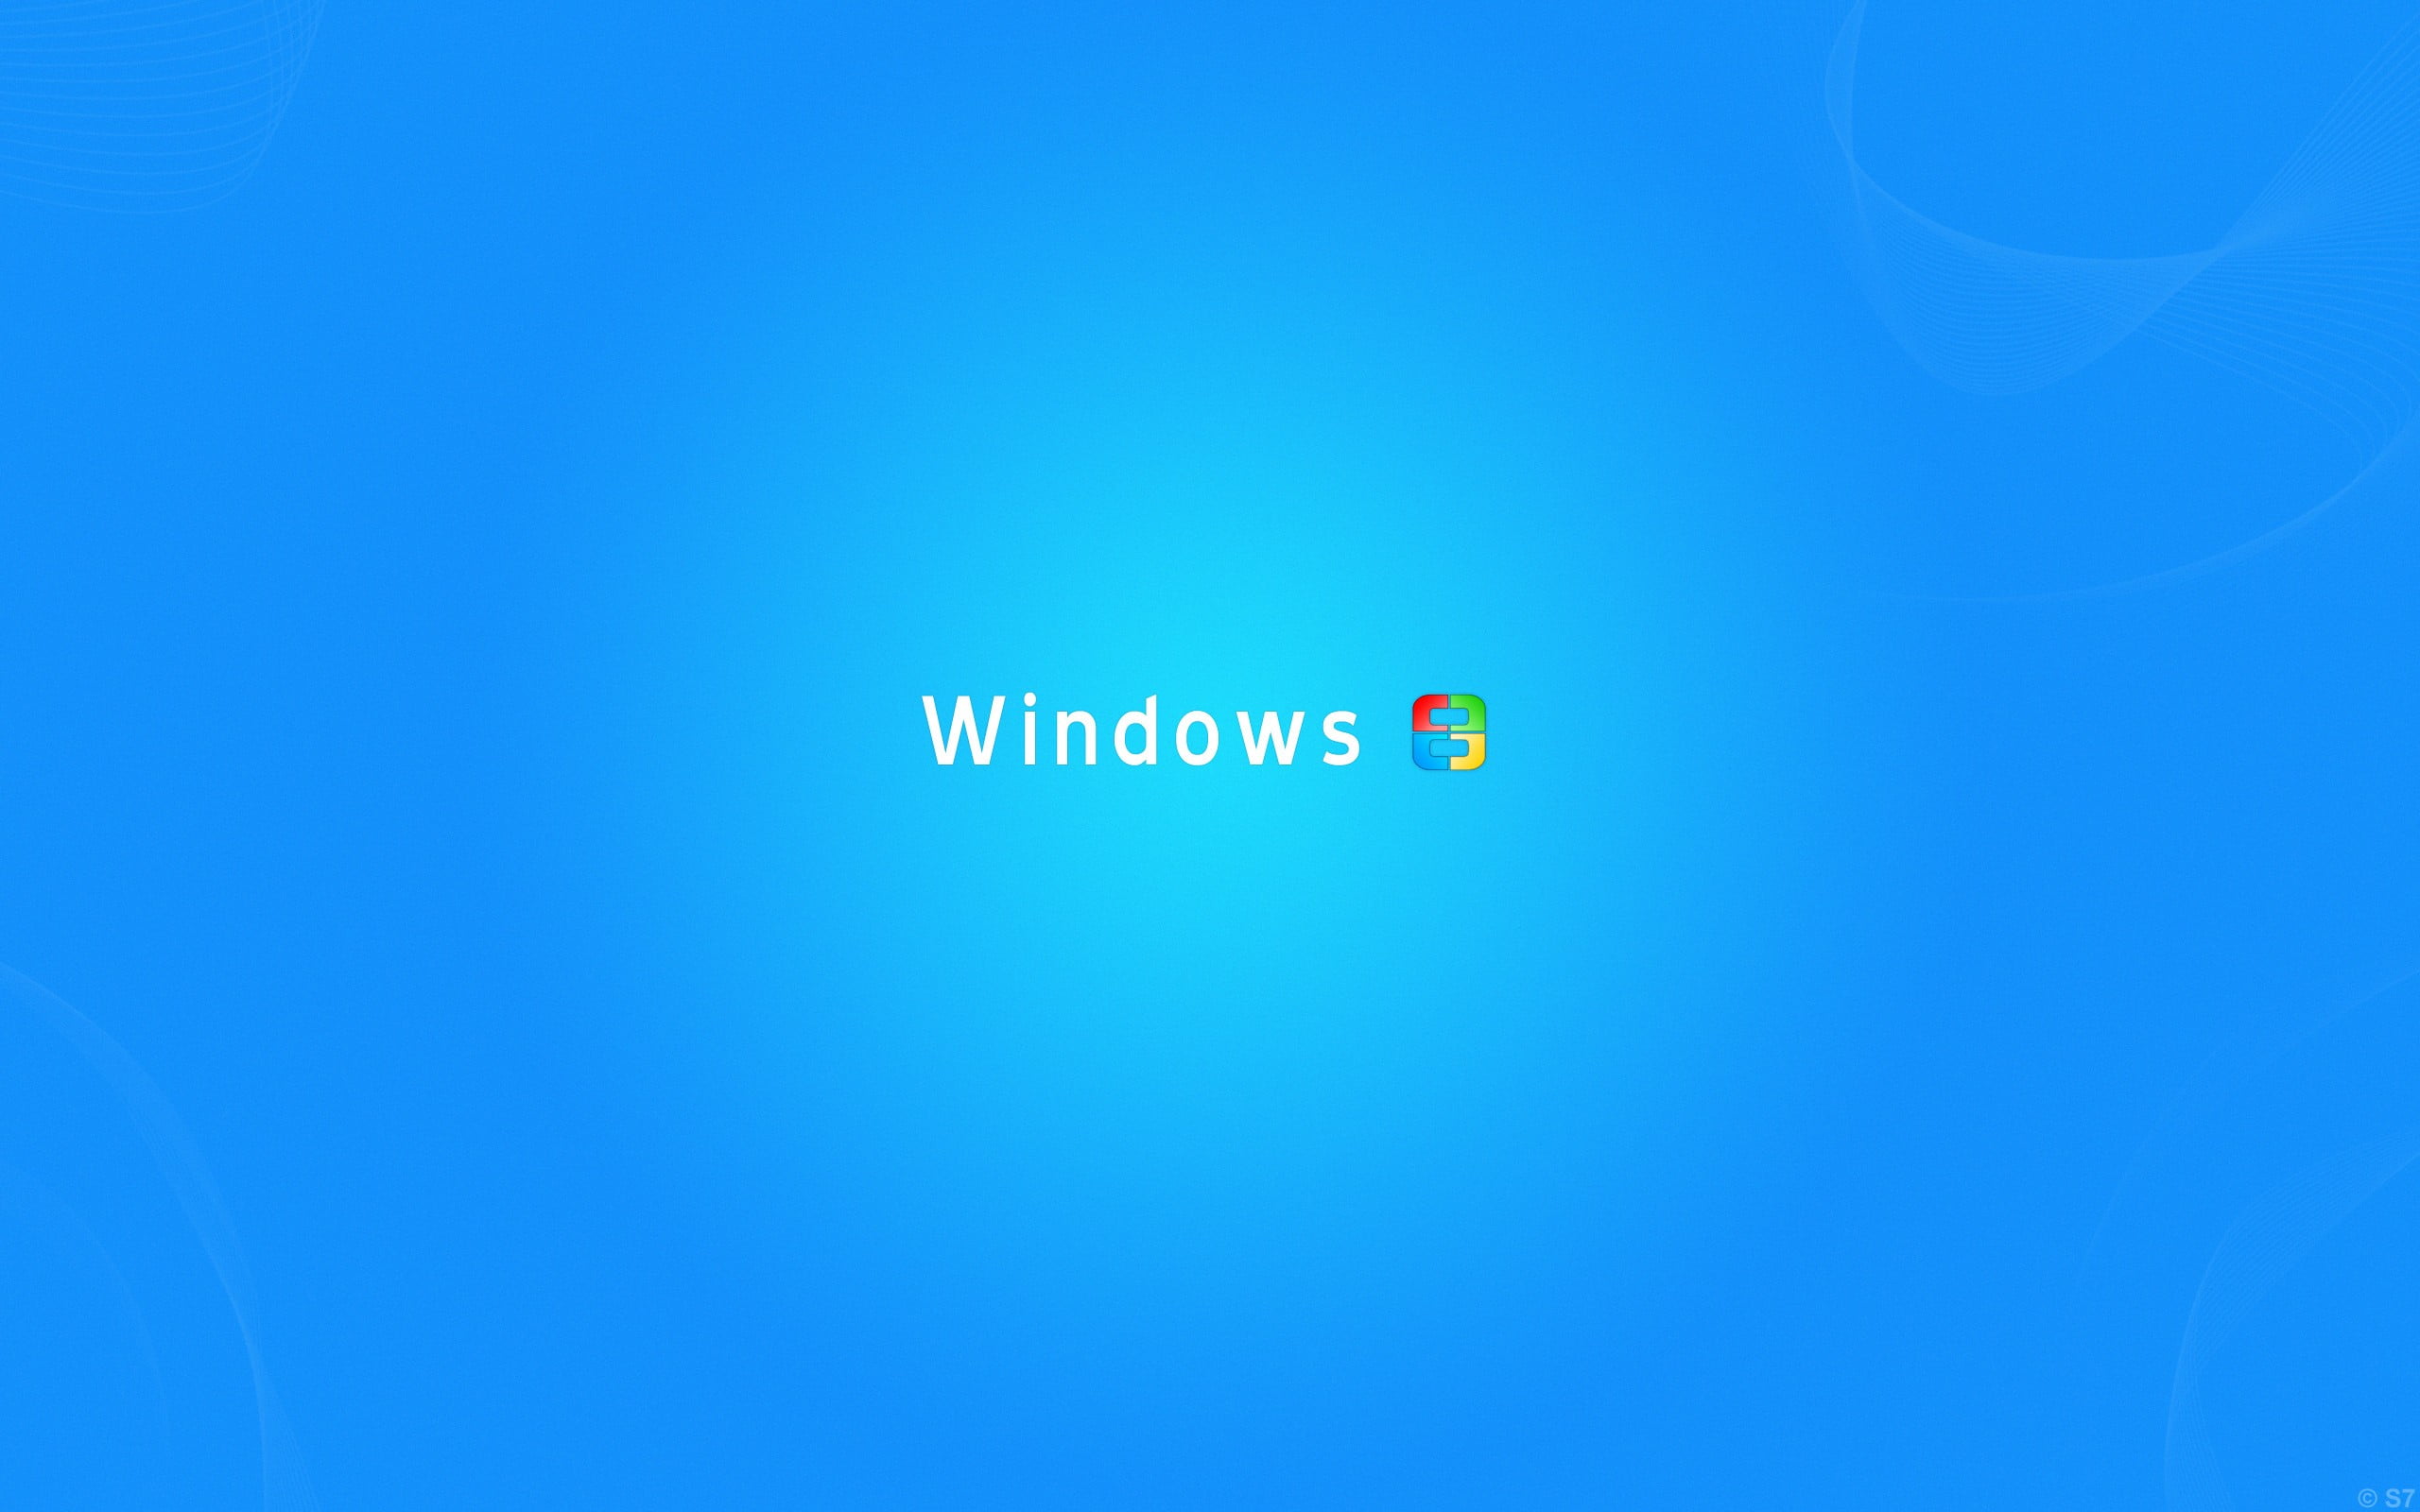 Windows illustration, Windows 8, minimalism